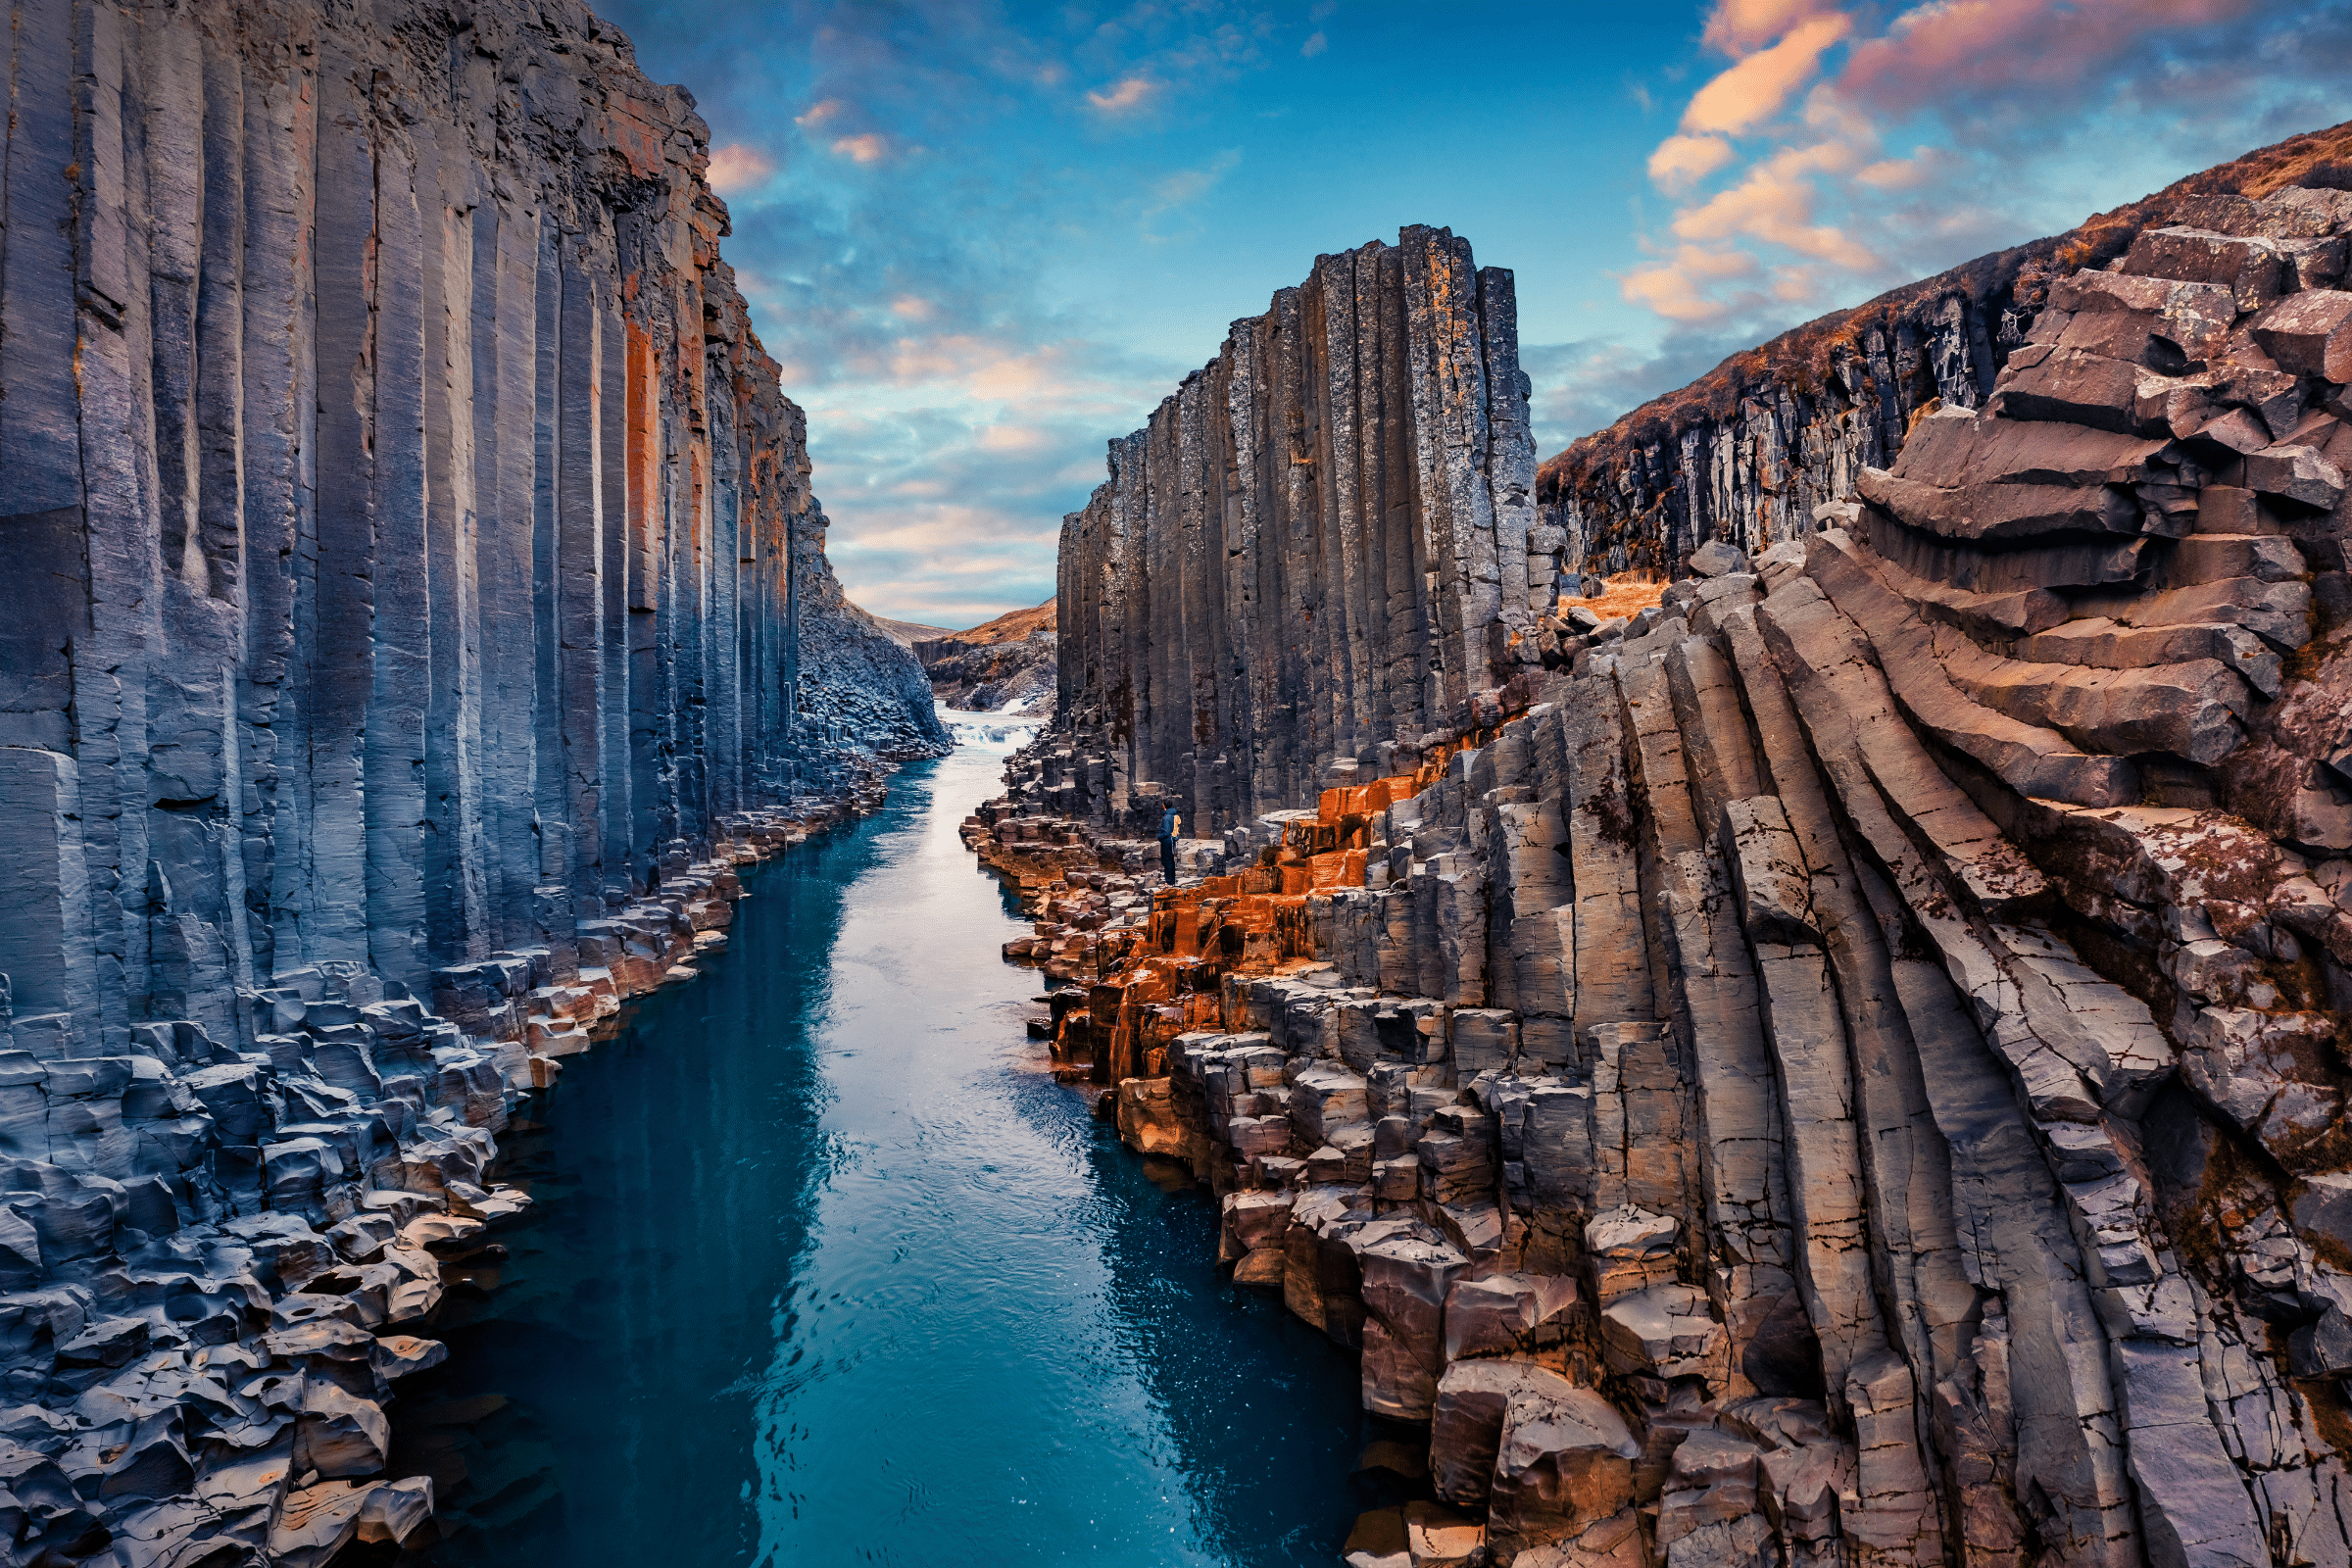 Blue river between dark basalt walls of Studlagil Canyon in Iceland.